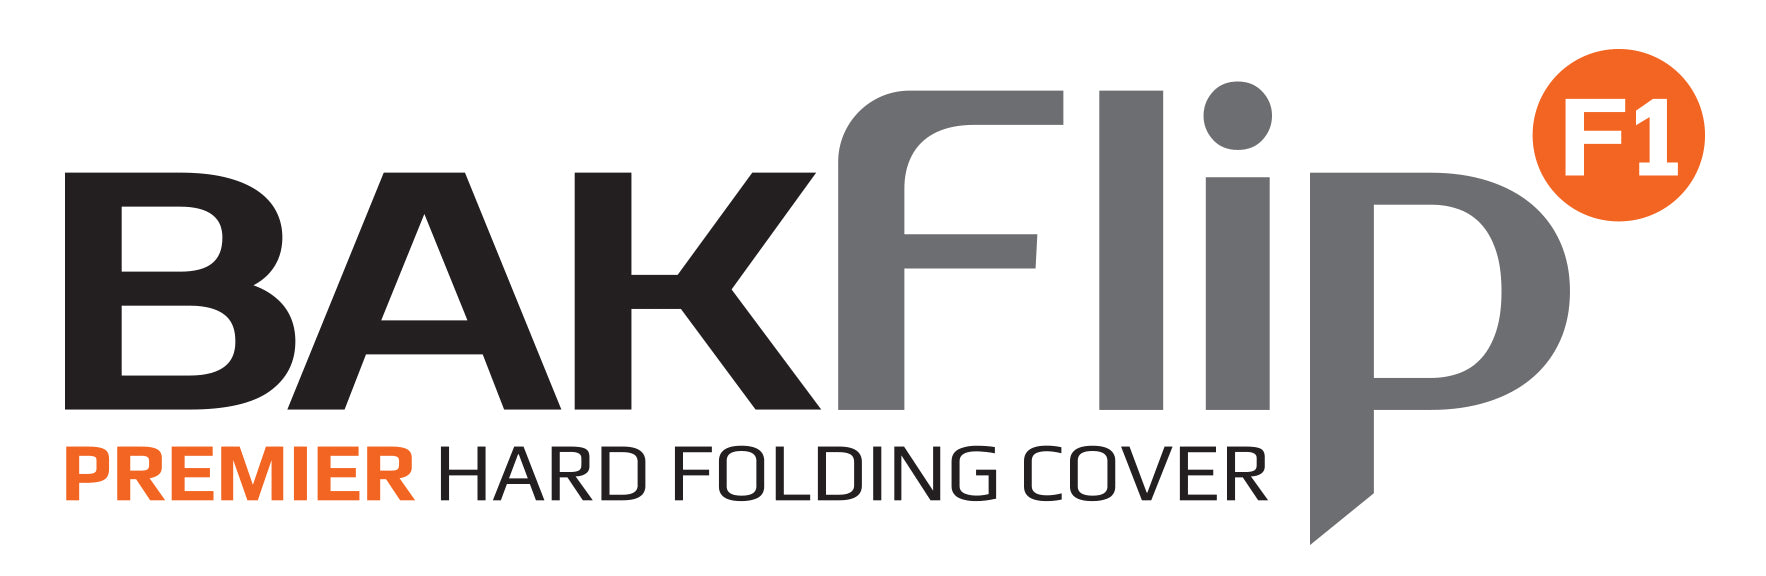 BAKFlip_F1_Logo.jpg